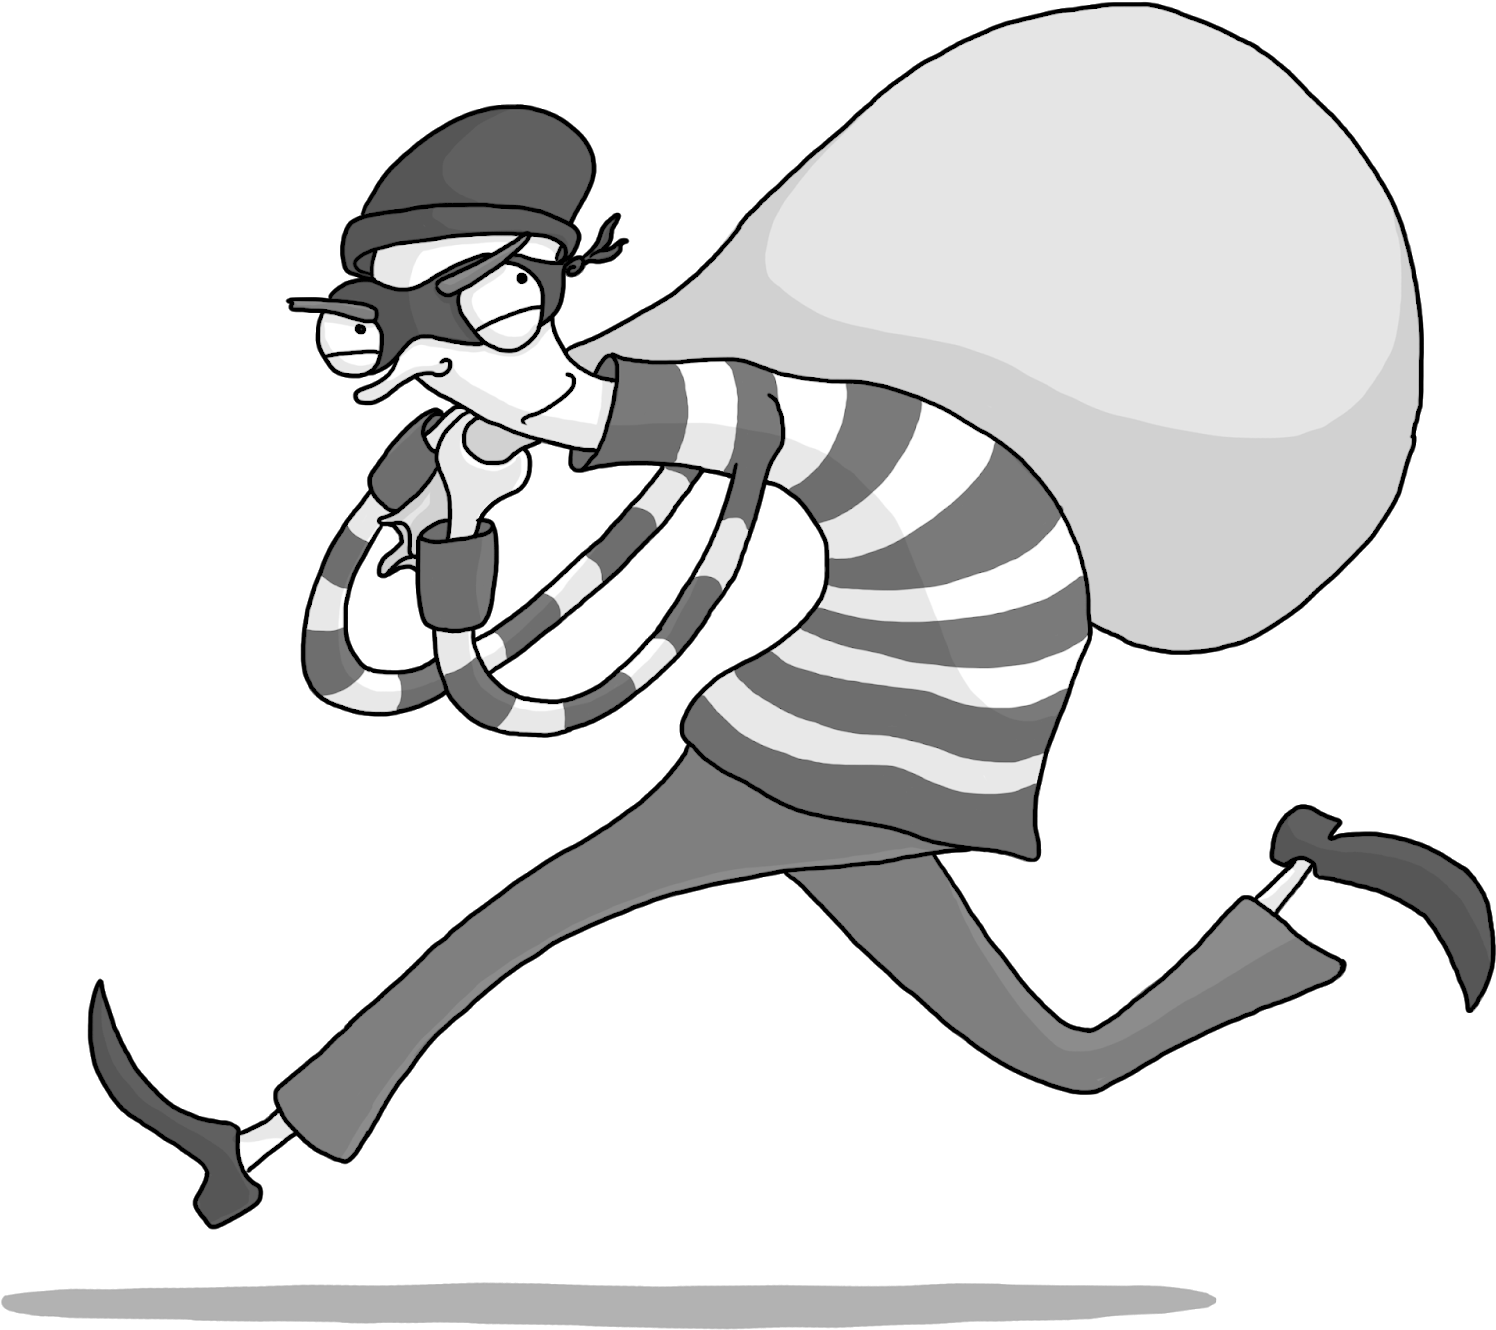 A Cartoon Of A Thief Running